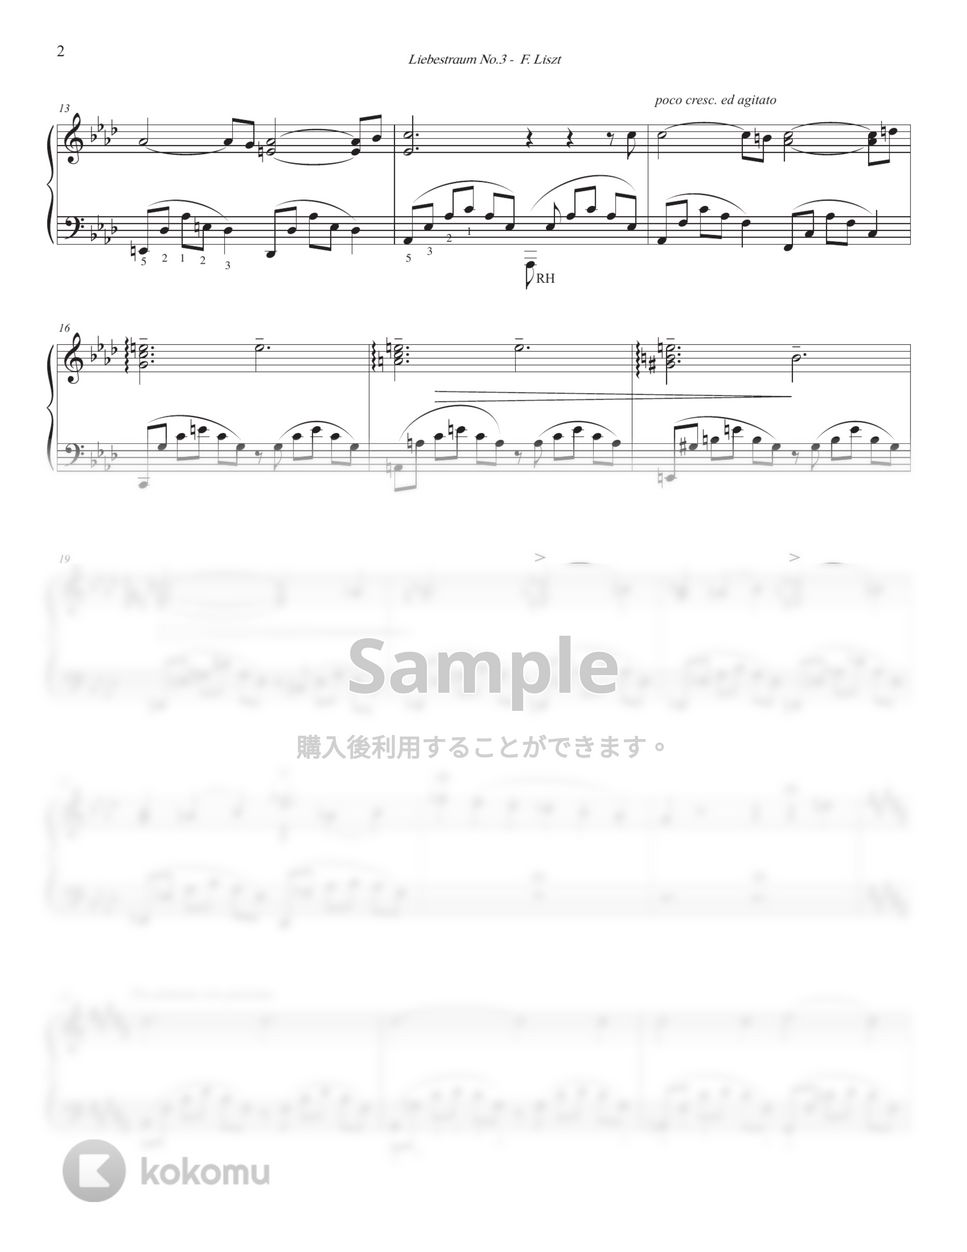 F. Liszt - Liszt - Liebestraum No. 3 (中級) by Jinnie J